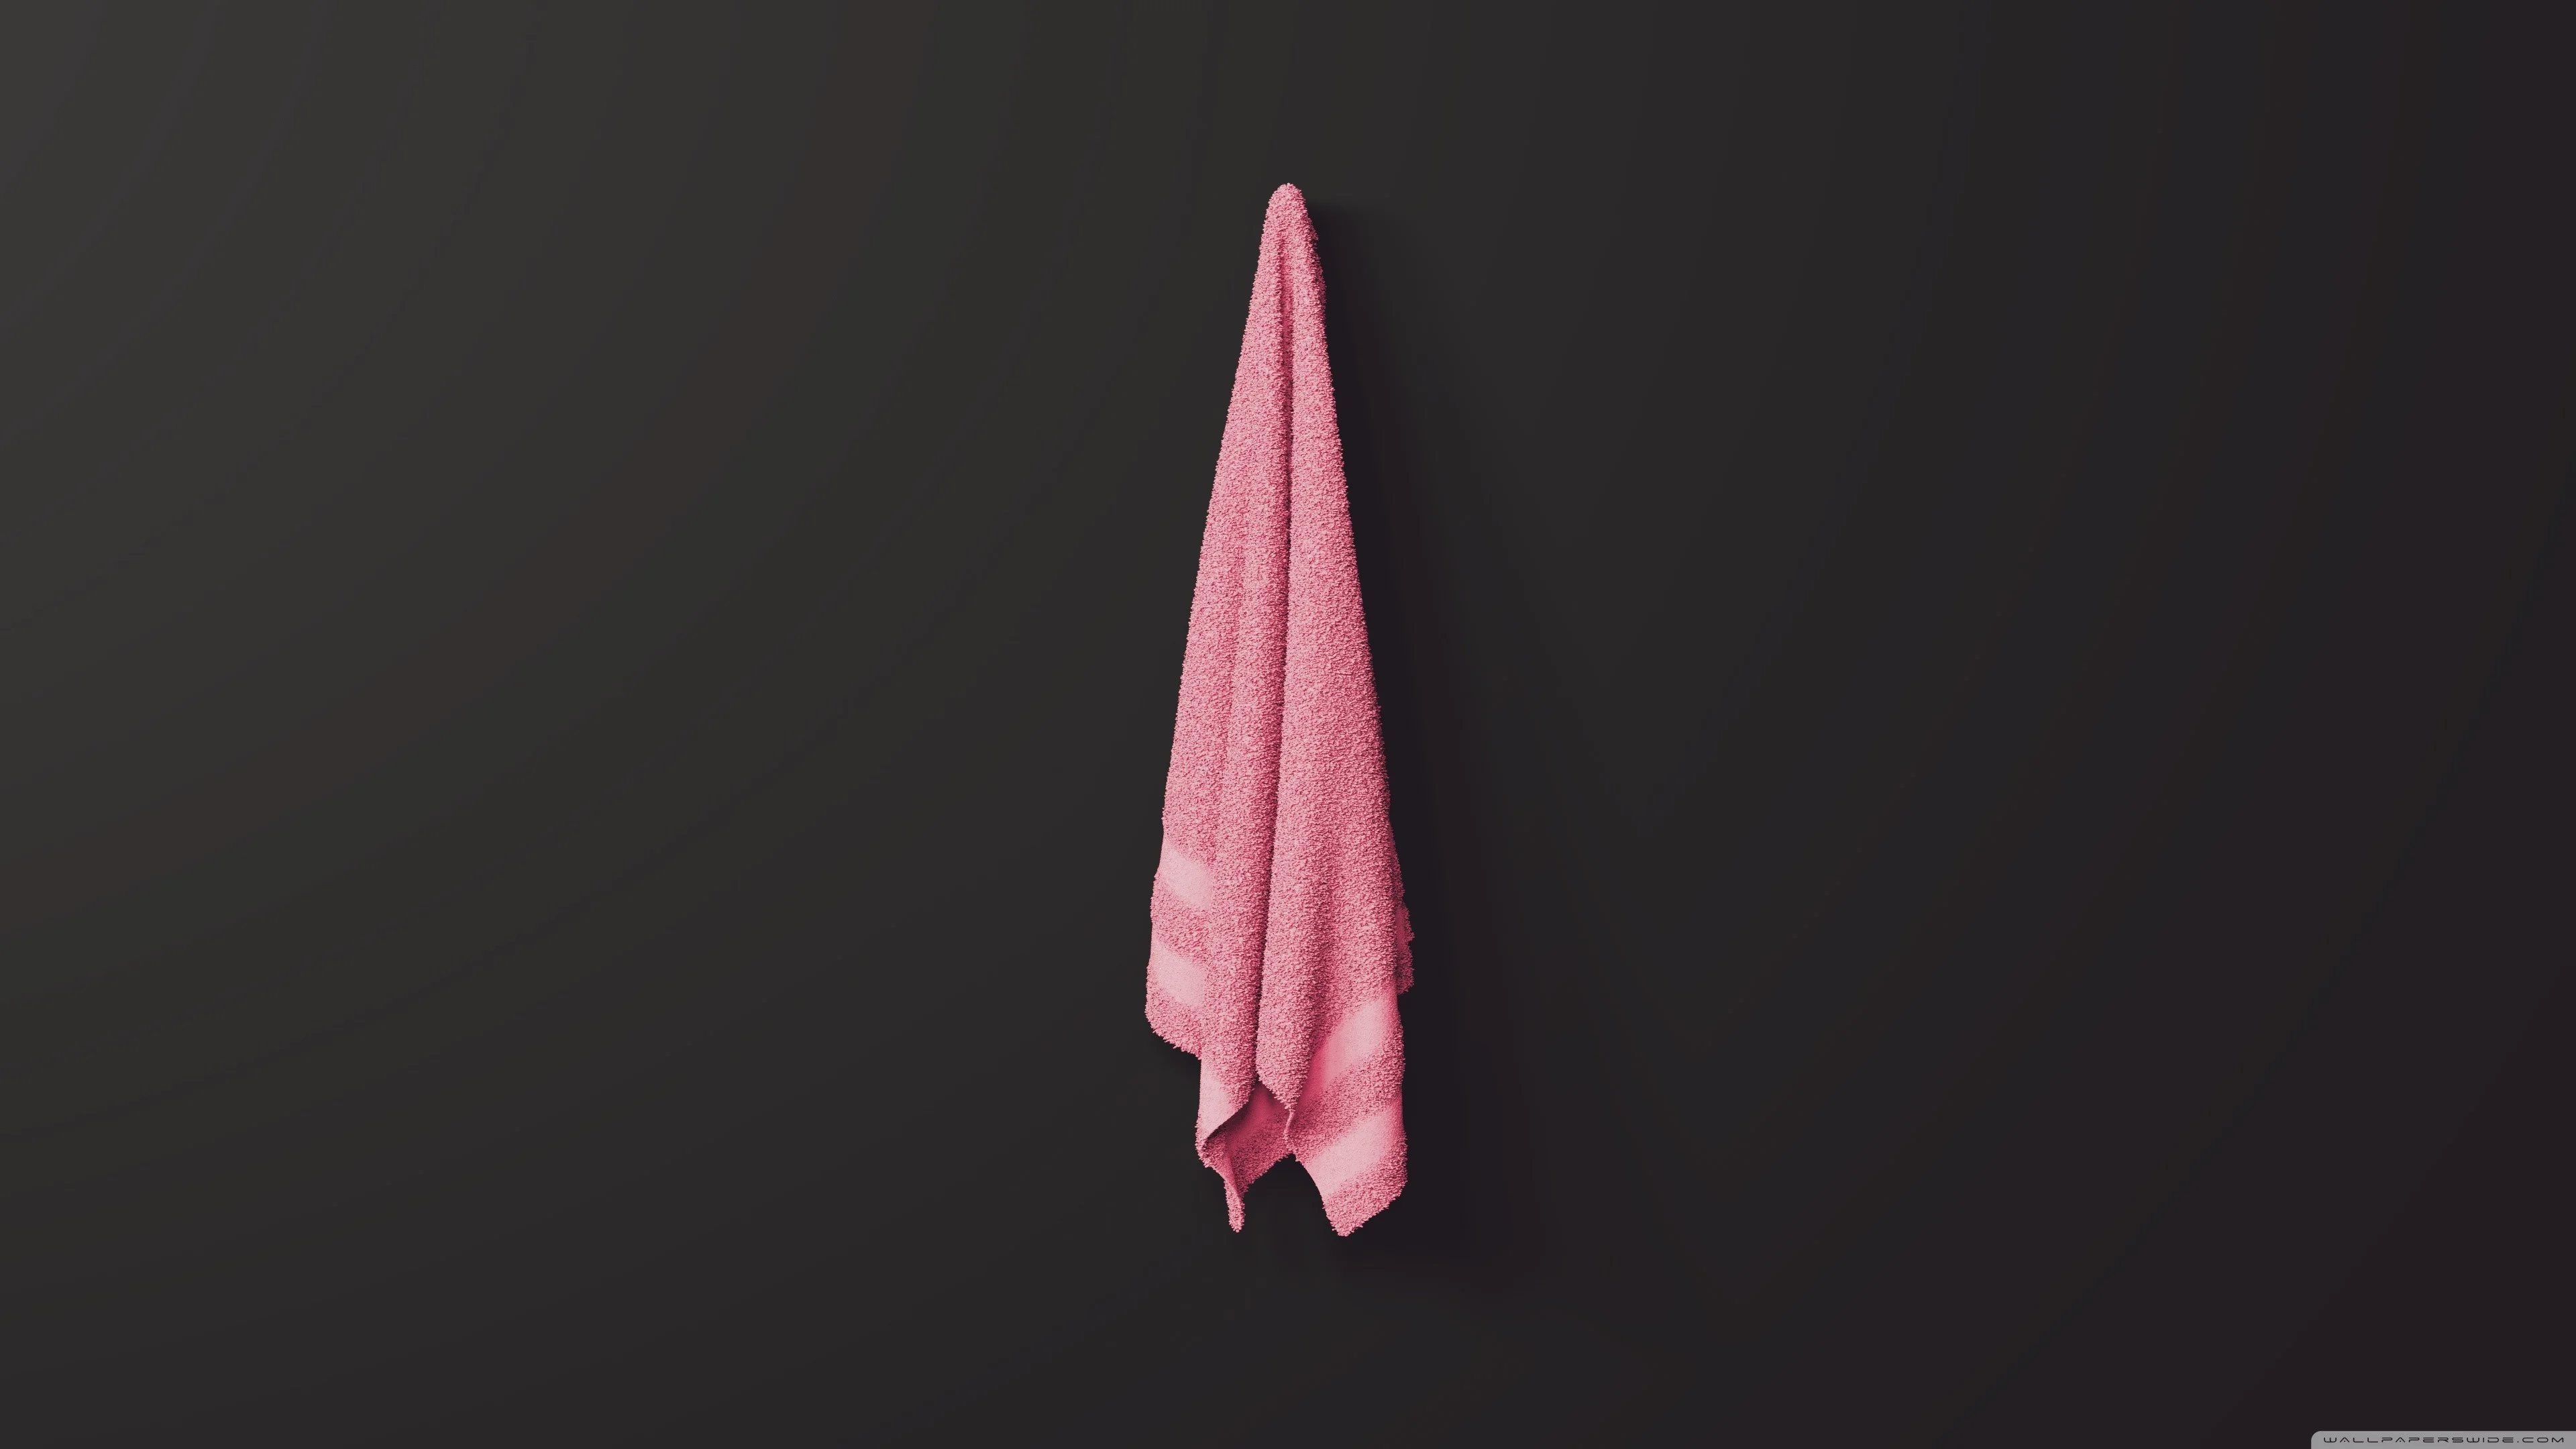 Minimal Towel Red 4K HD Wide Wallpaper for Widescreen